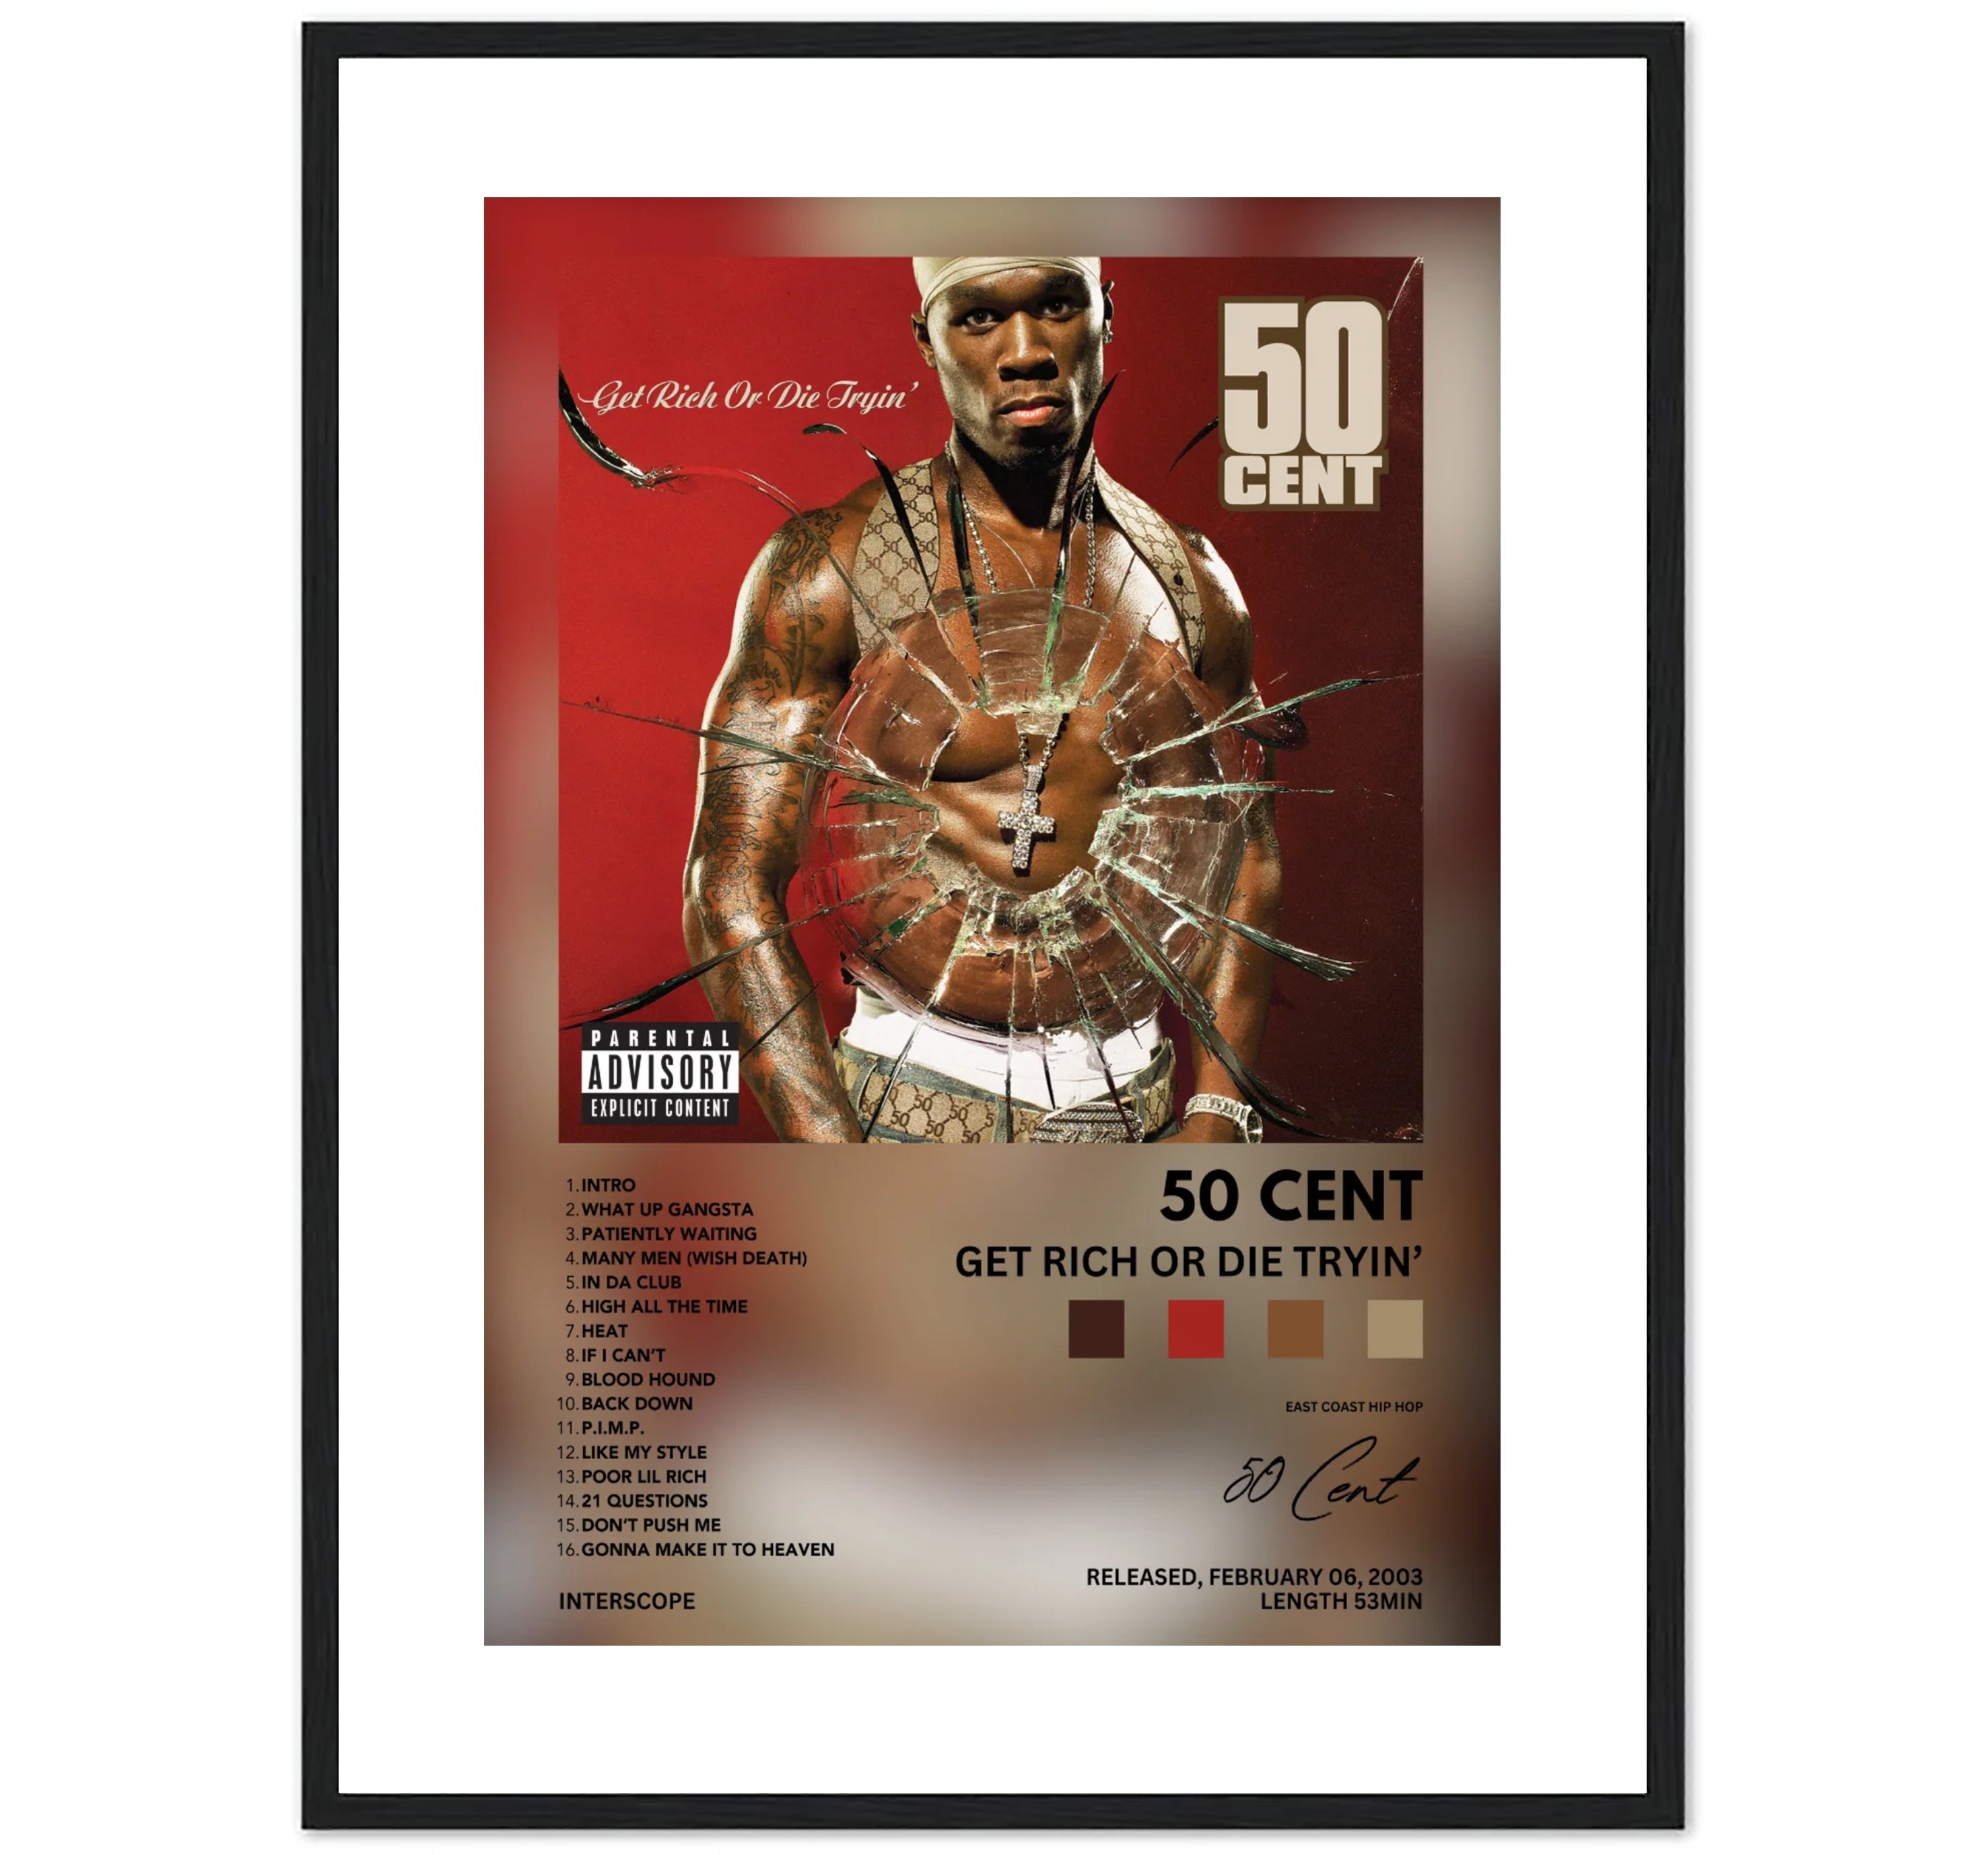 50 Cent "Get Rich or Die Tryin"